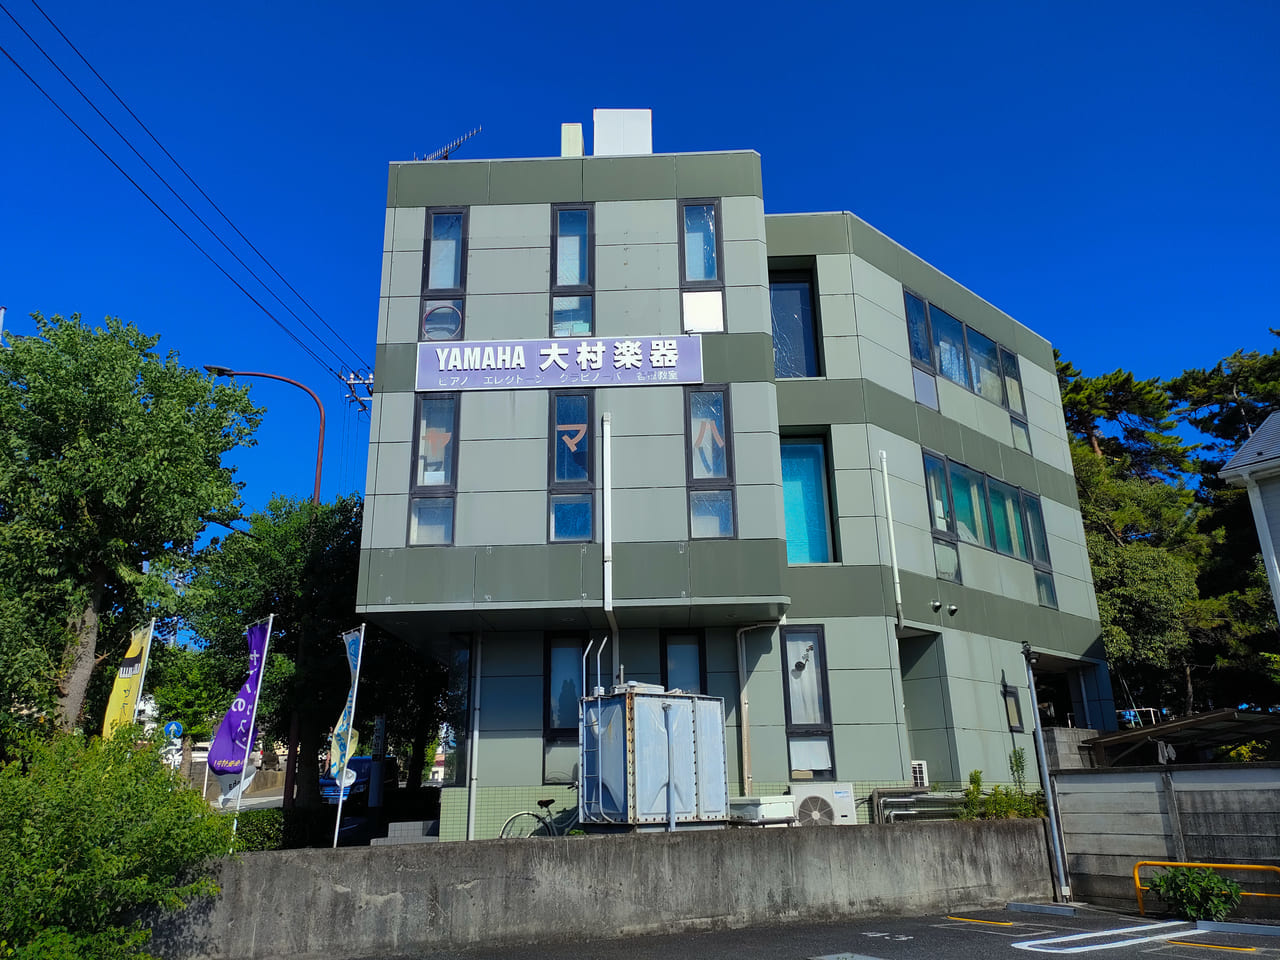 YAMAHA音楽教室の特約店「大村楽器 平塚店」が8月31日（木）に閉店します。